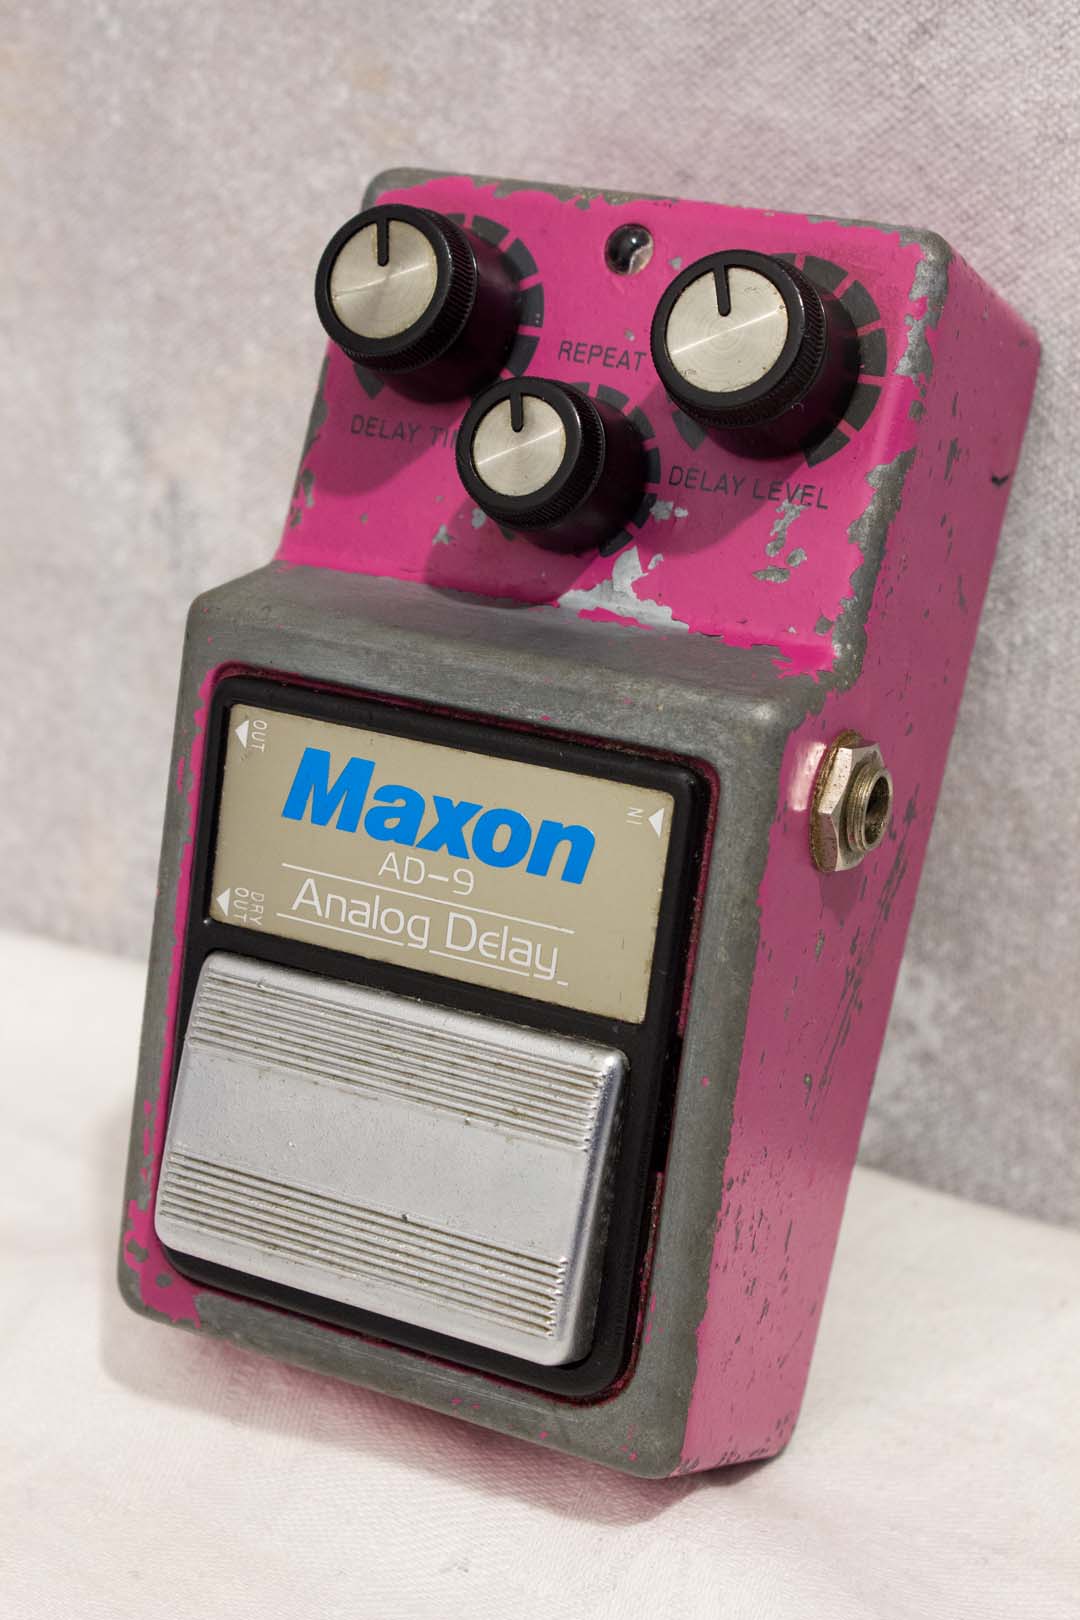 Maxon AD-9 Analog Delay Pedal 1983